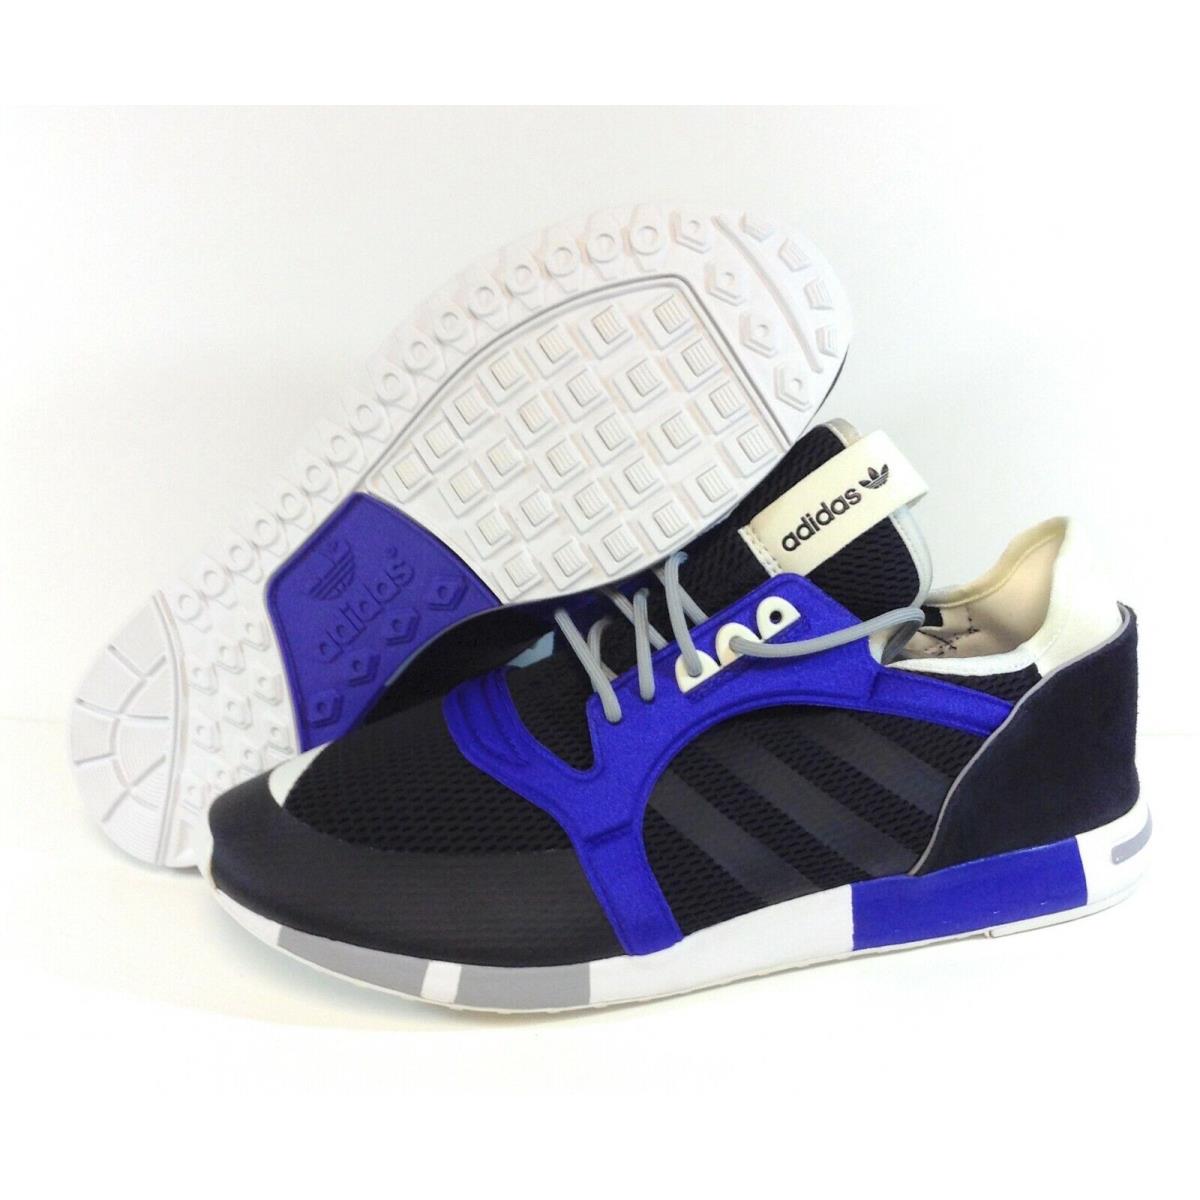 Mens Adidas Boston Super CC B25842 Black Purple 2015 Deadstock Sneakers Shoes - Black , Black Manufacturer